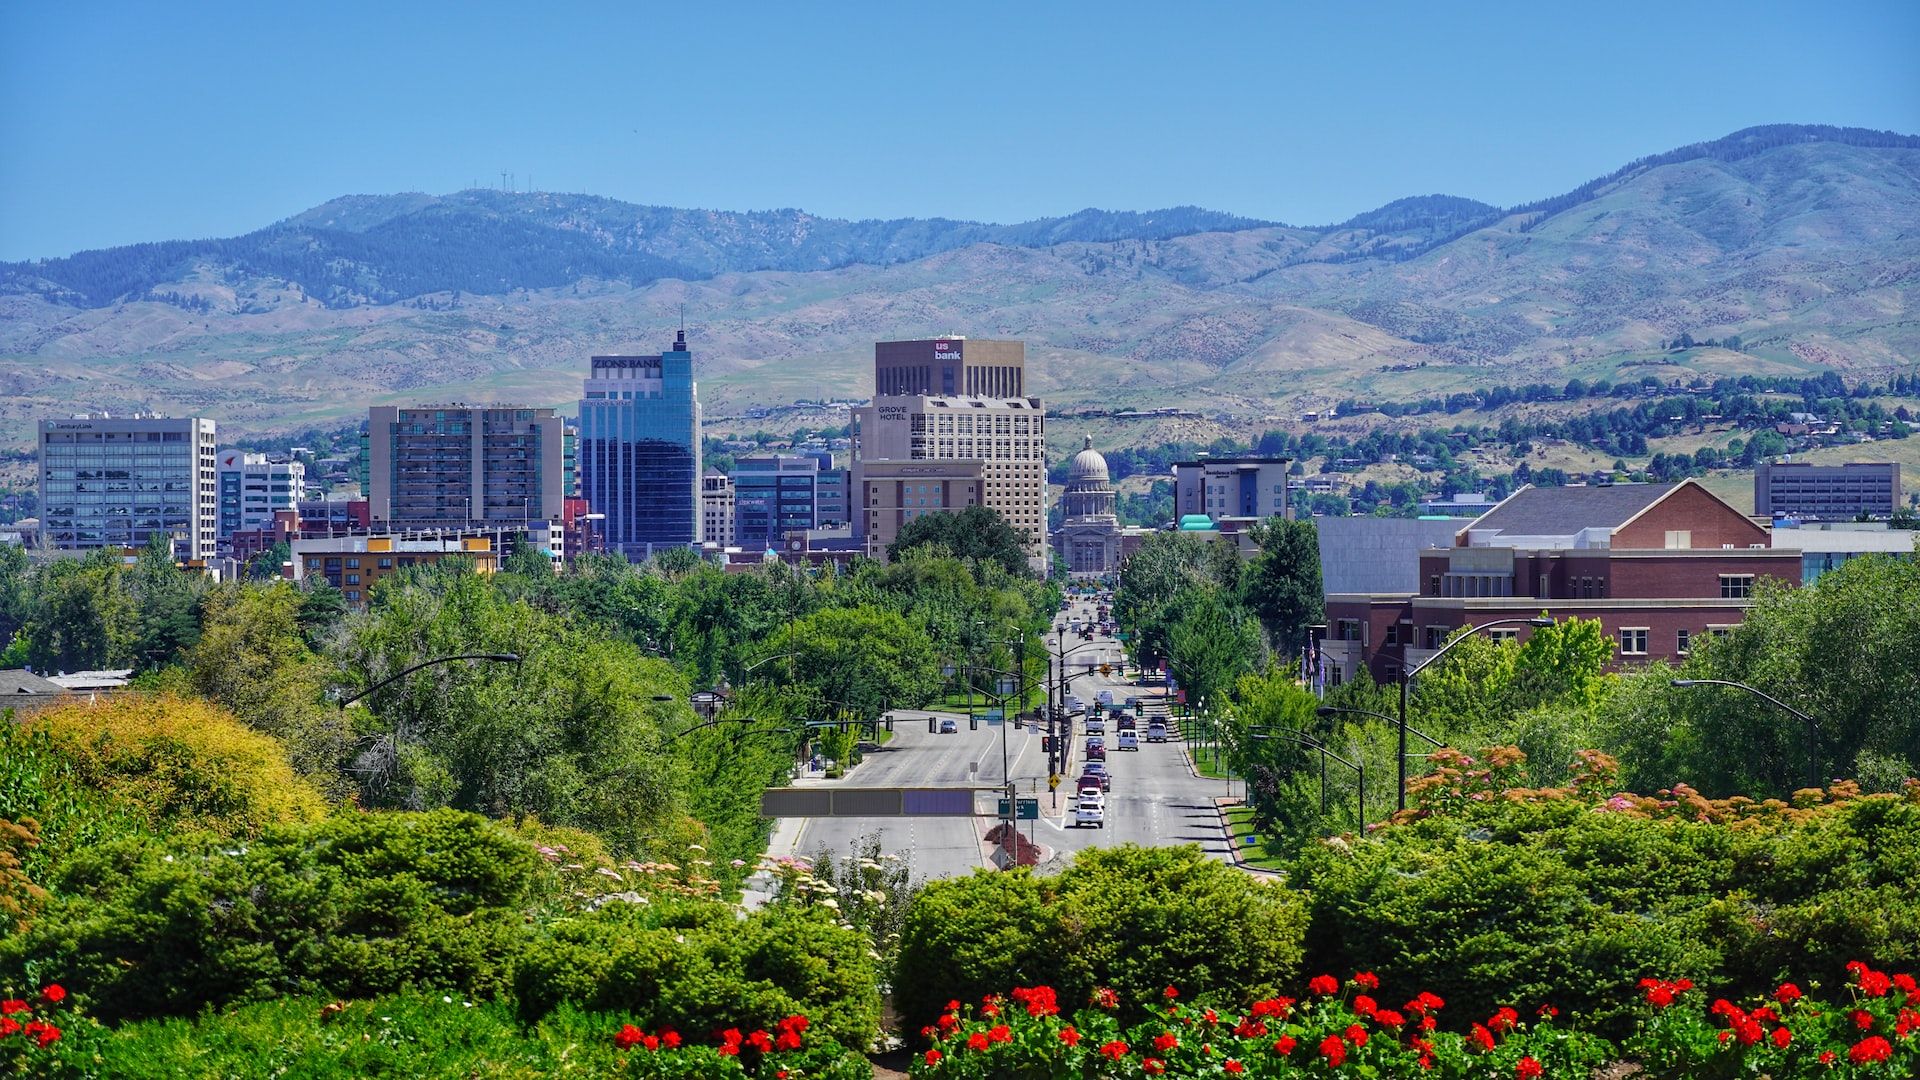 A view of Boise, Idaho